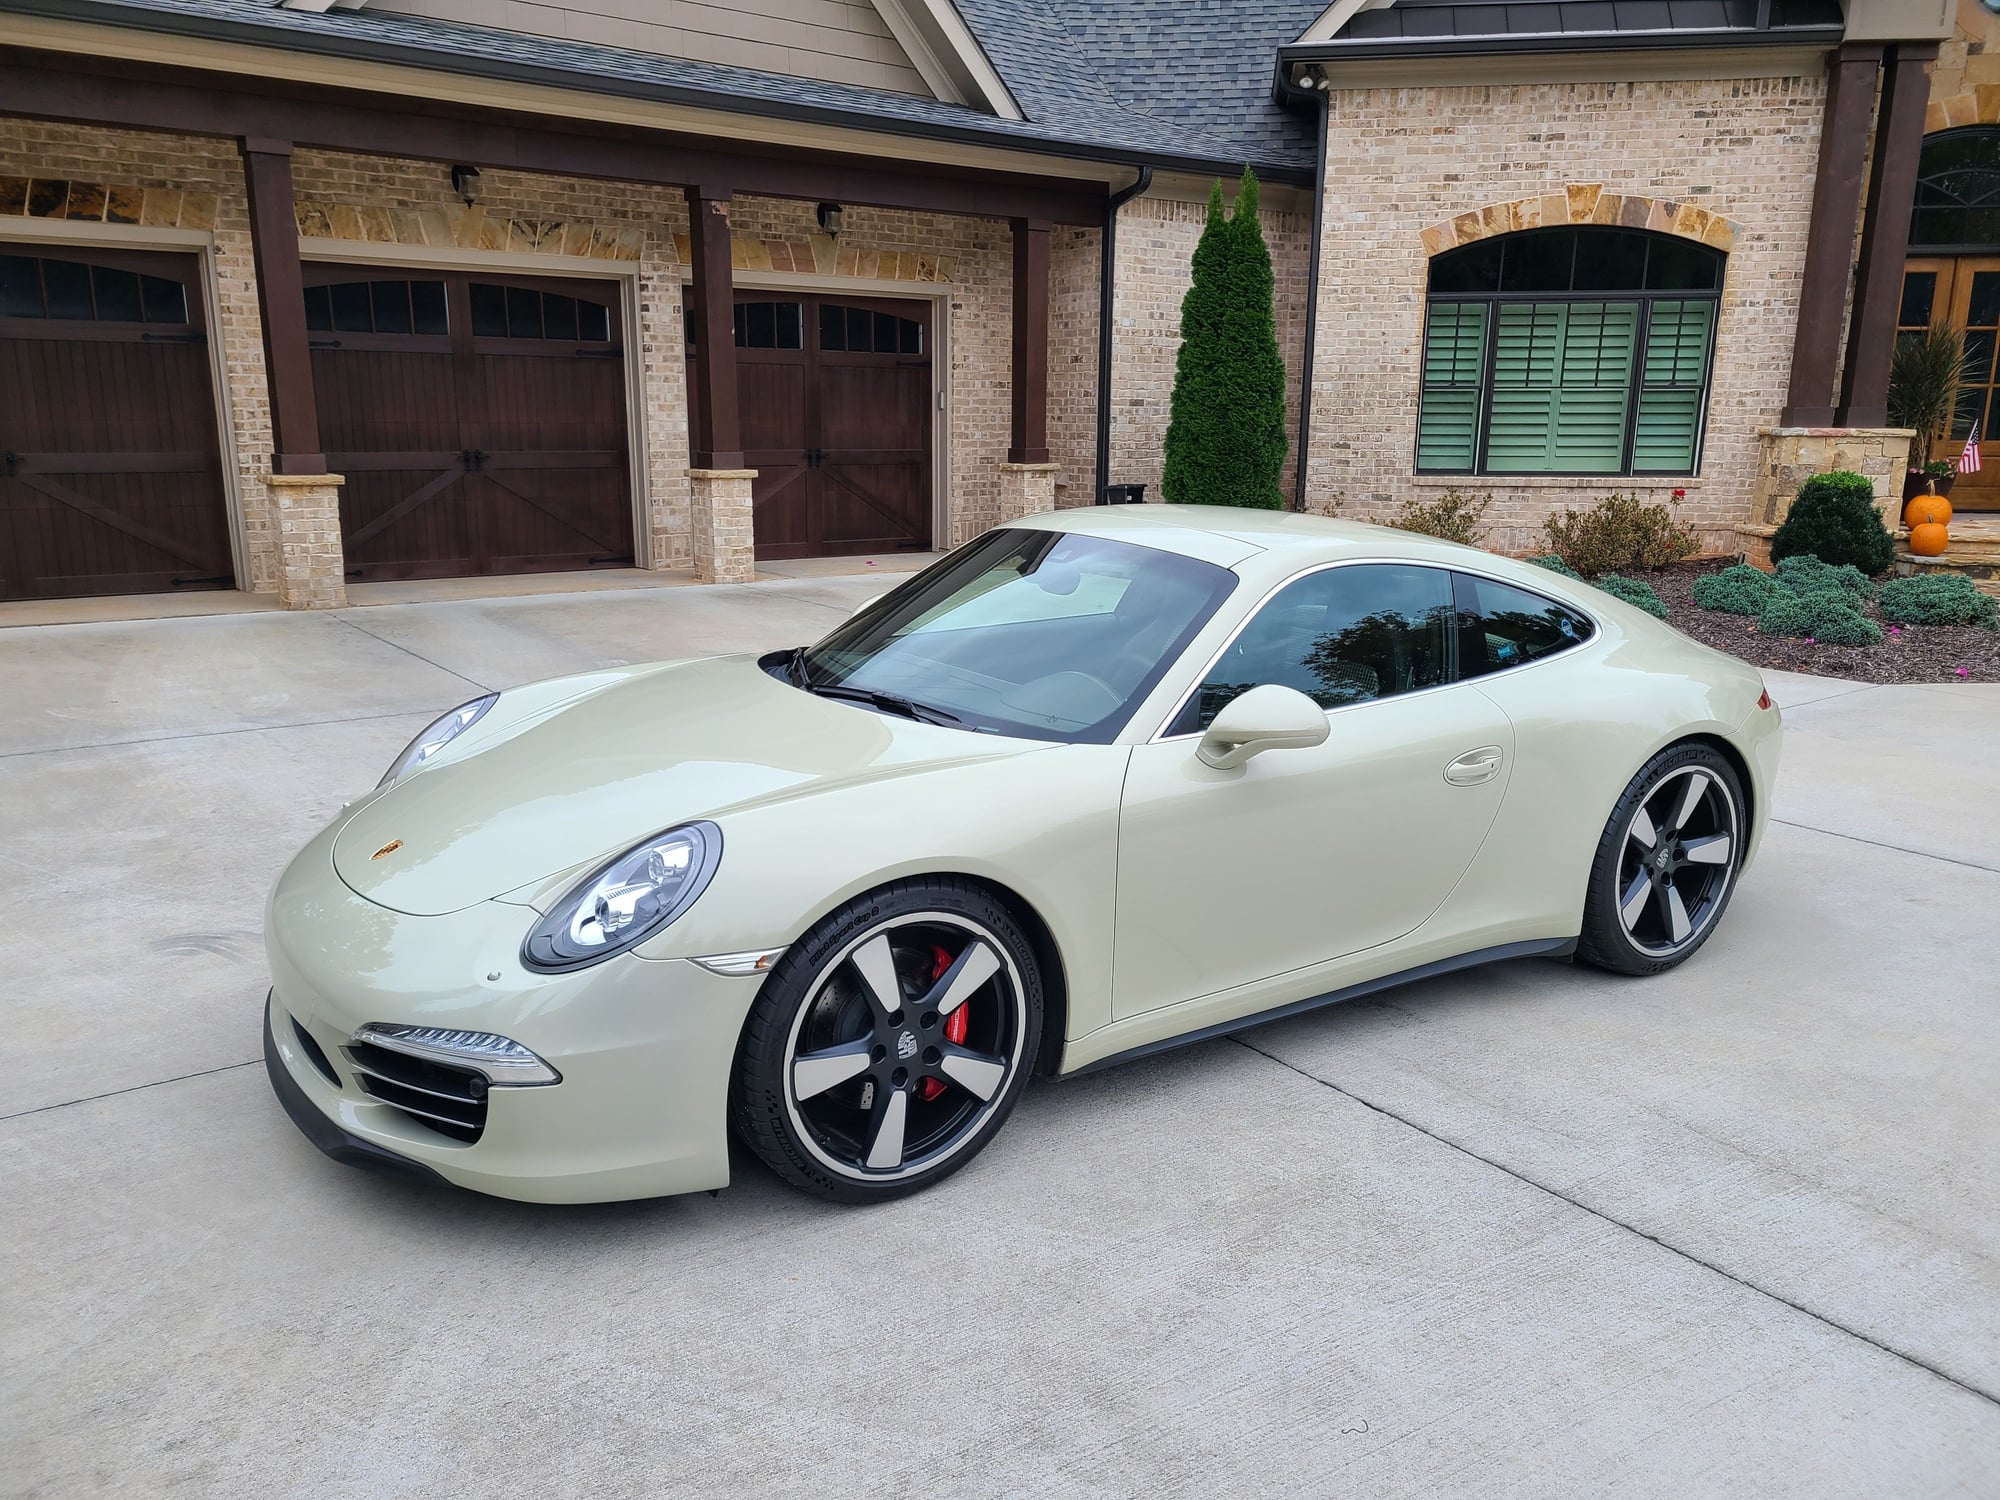 2014 Porsche 911 - 2014 Porsche 50th Anniversary Edition. Pristine Condition CPO Certified - Used - VIN wp0ab2a98es121572 - 36,325 Miles - 6 cyl - 2WD - Automatic - Coupe - Gray - Oakwood, GA 30566, United States